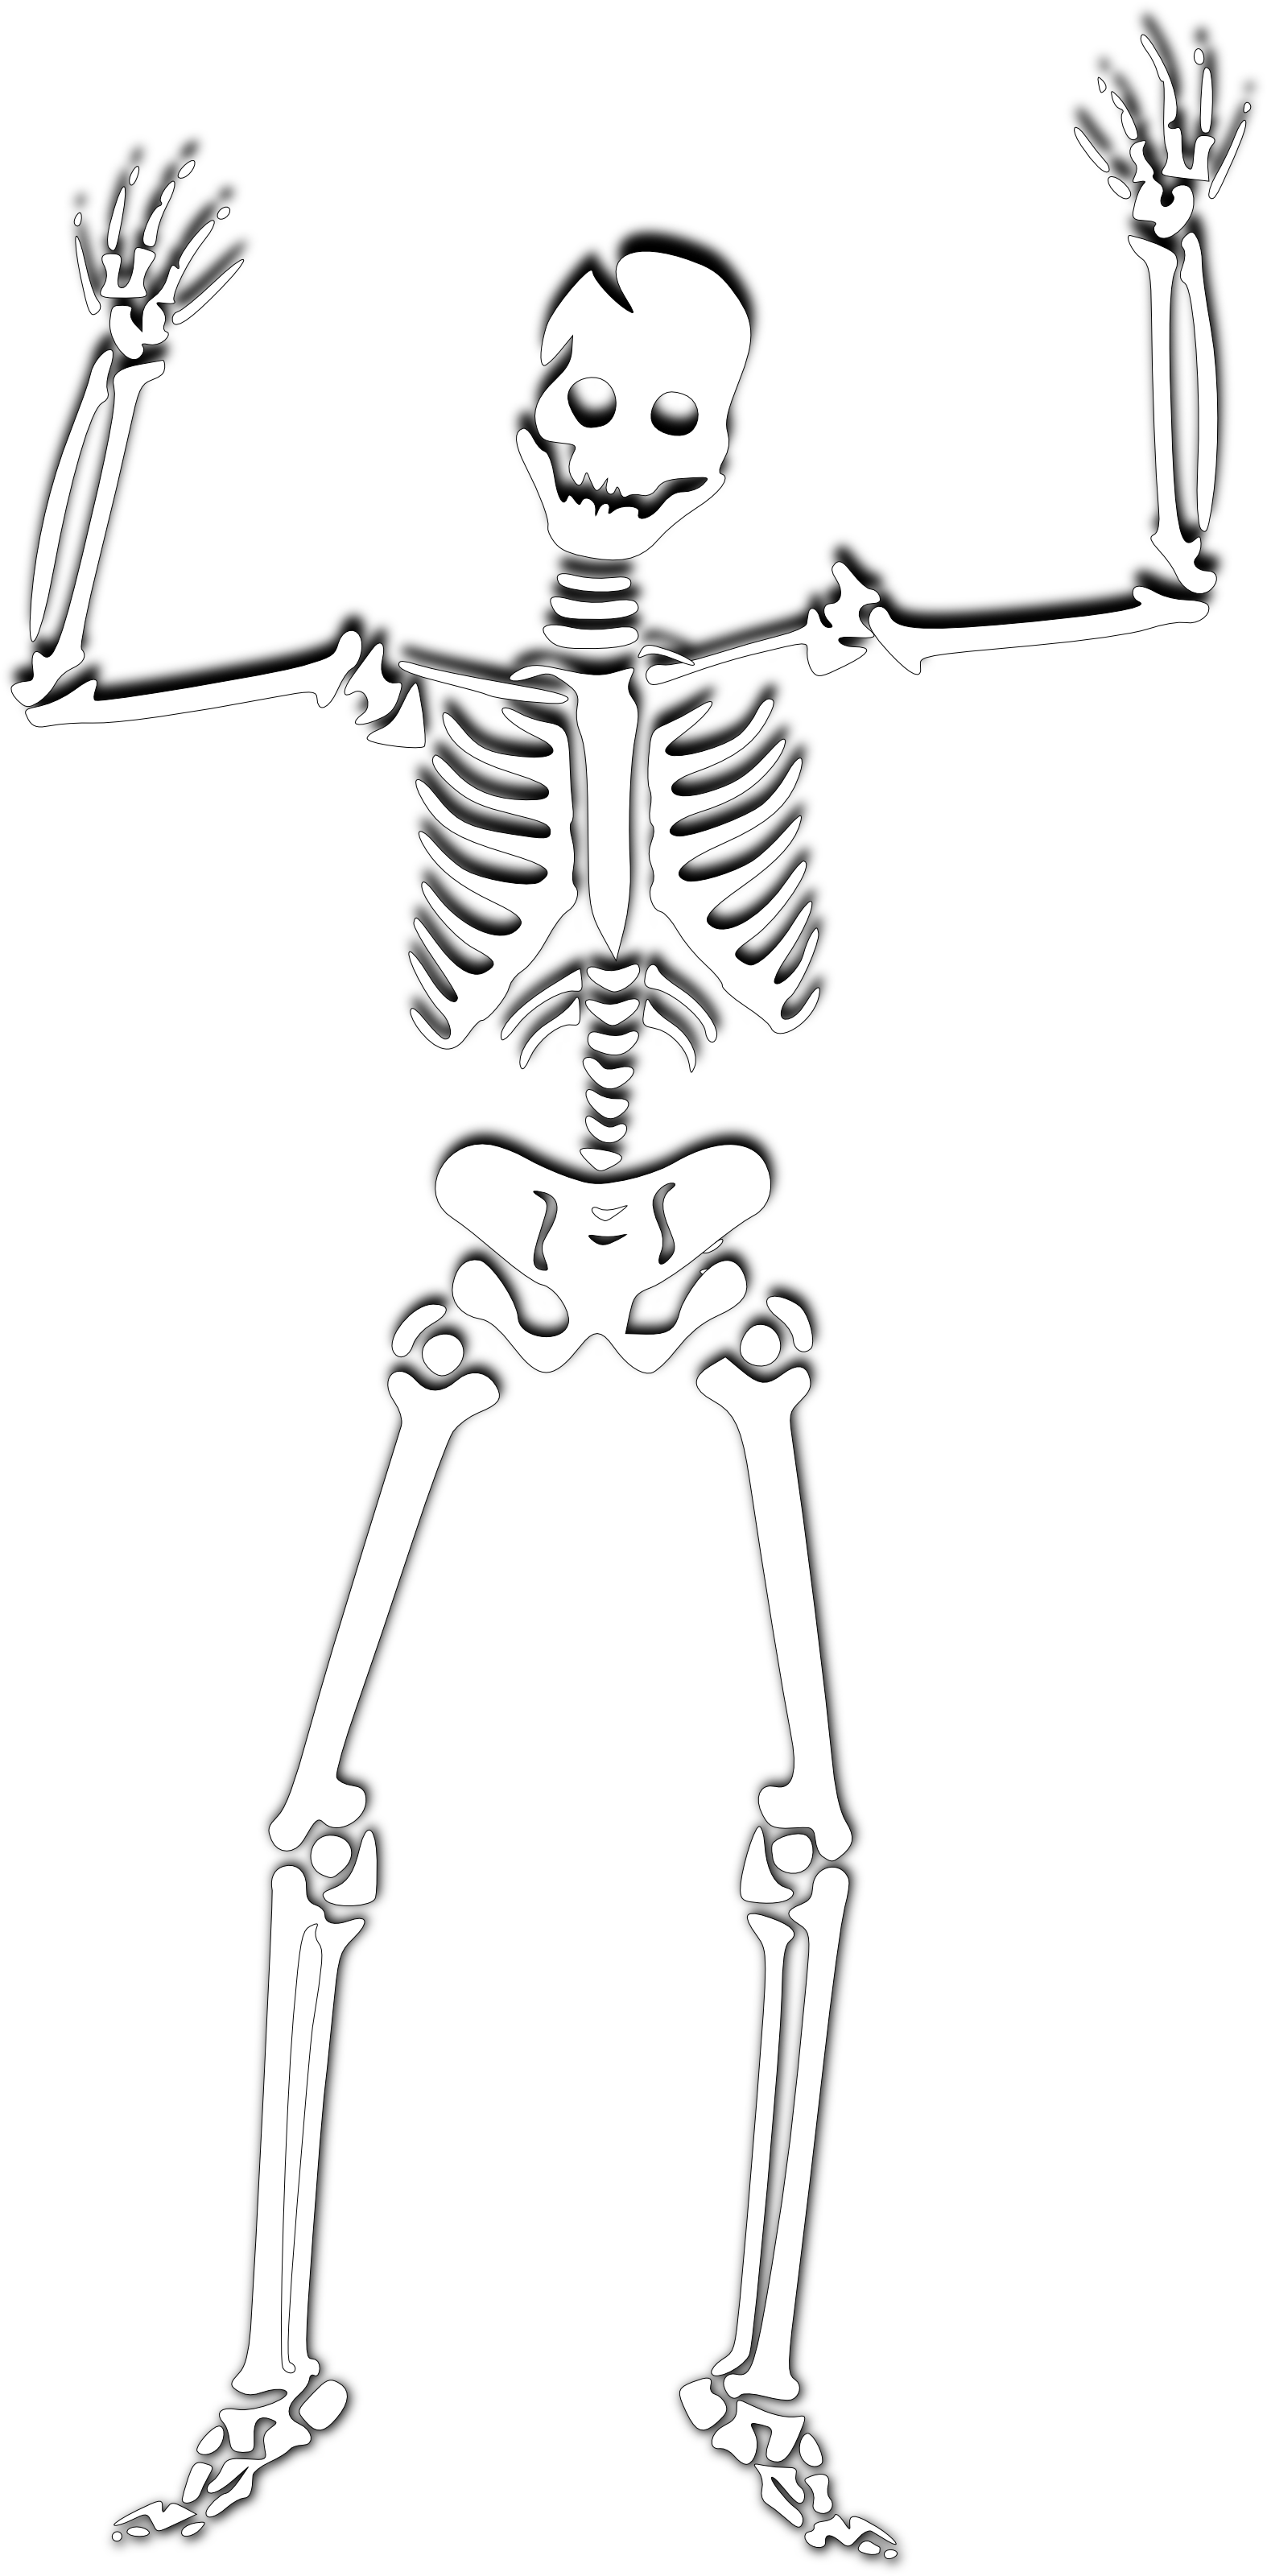 Skeleton - Free Halloween Clipart Illustration